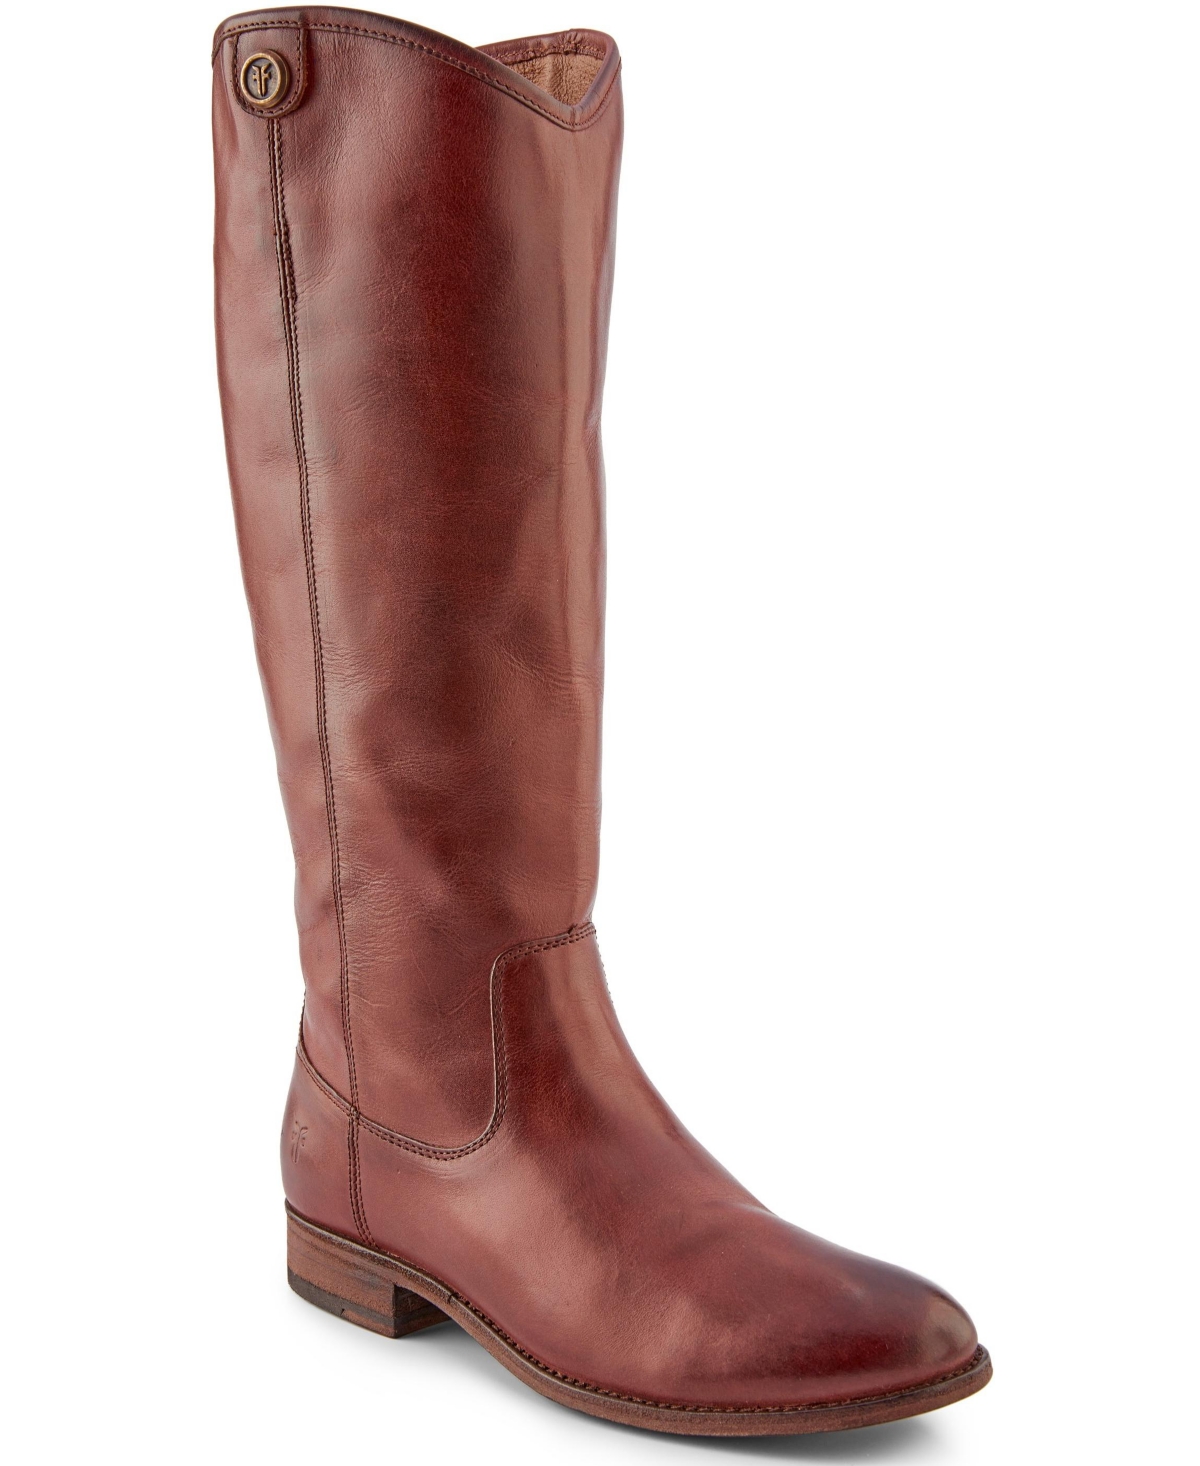 Women's Melissa Tall Boots - Mahogany Leather